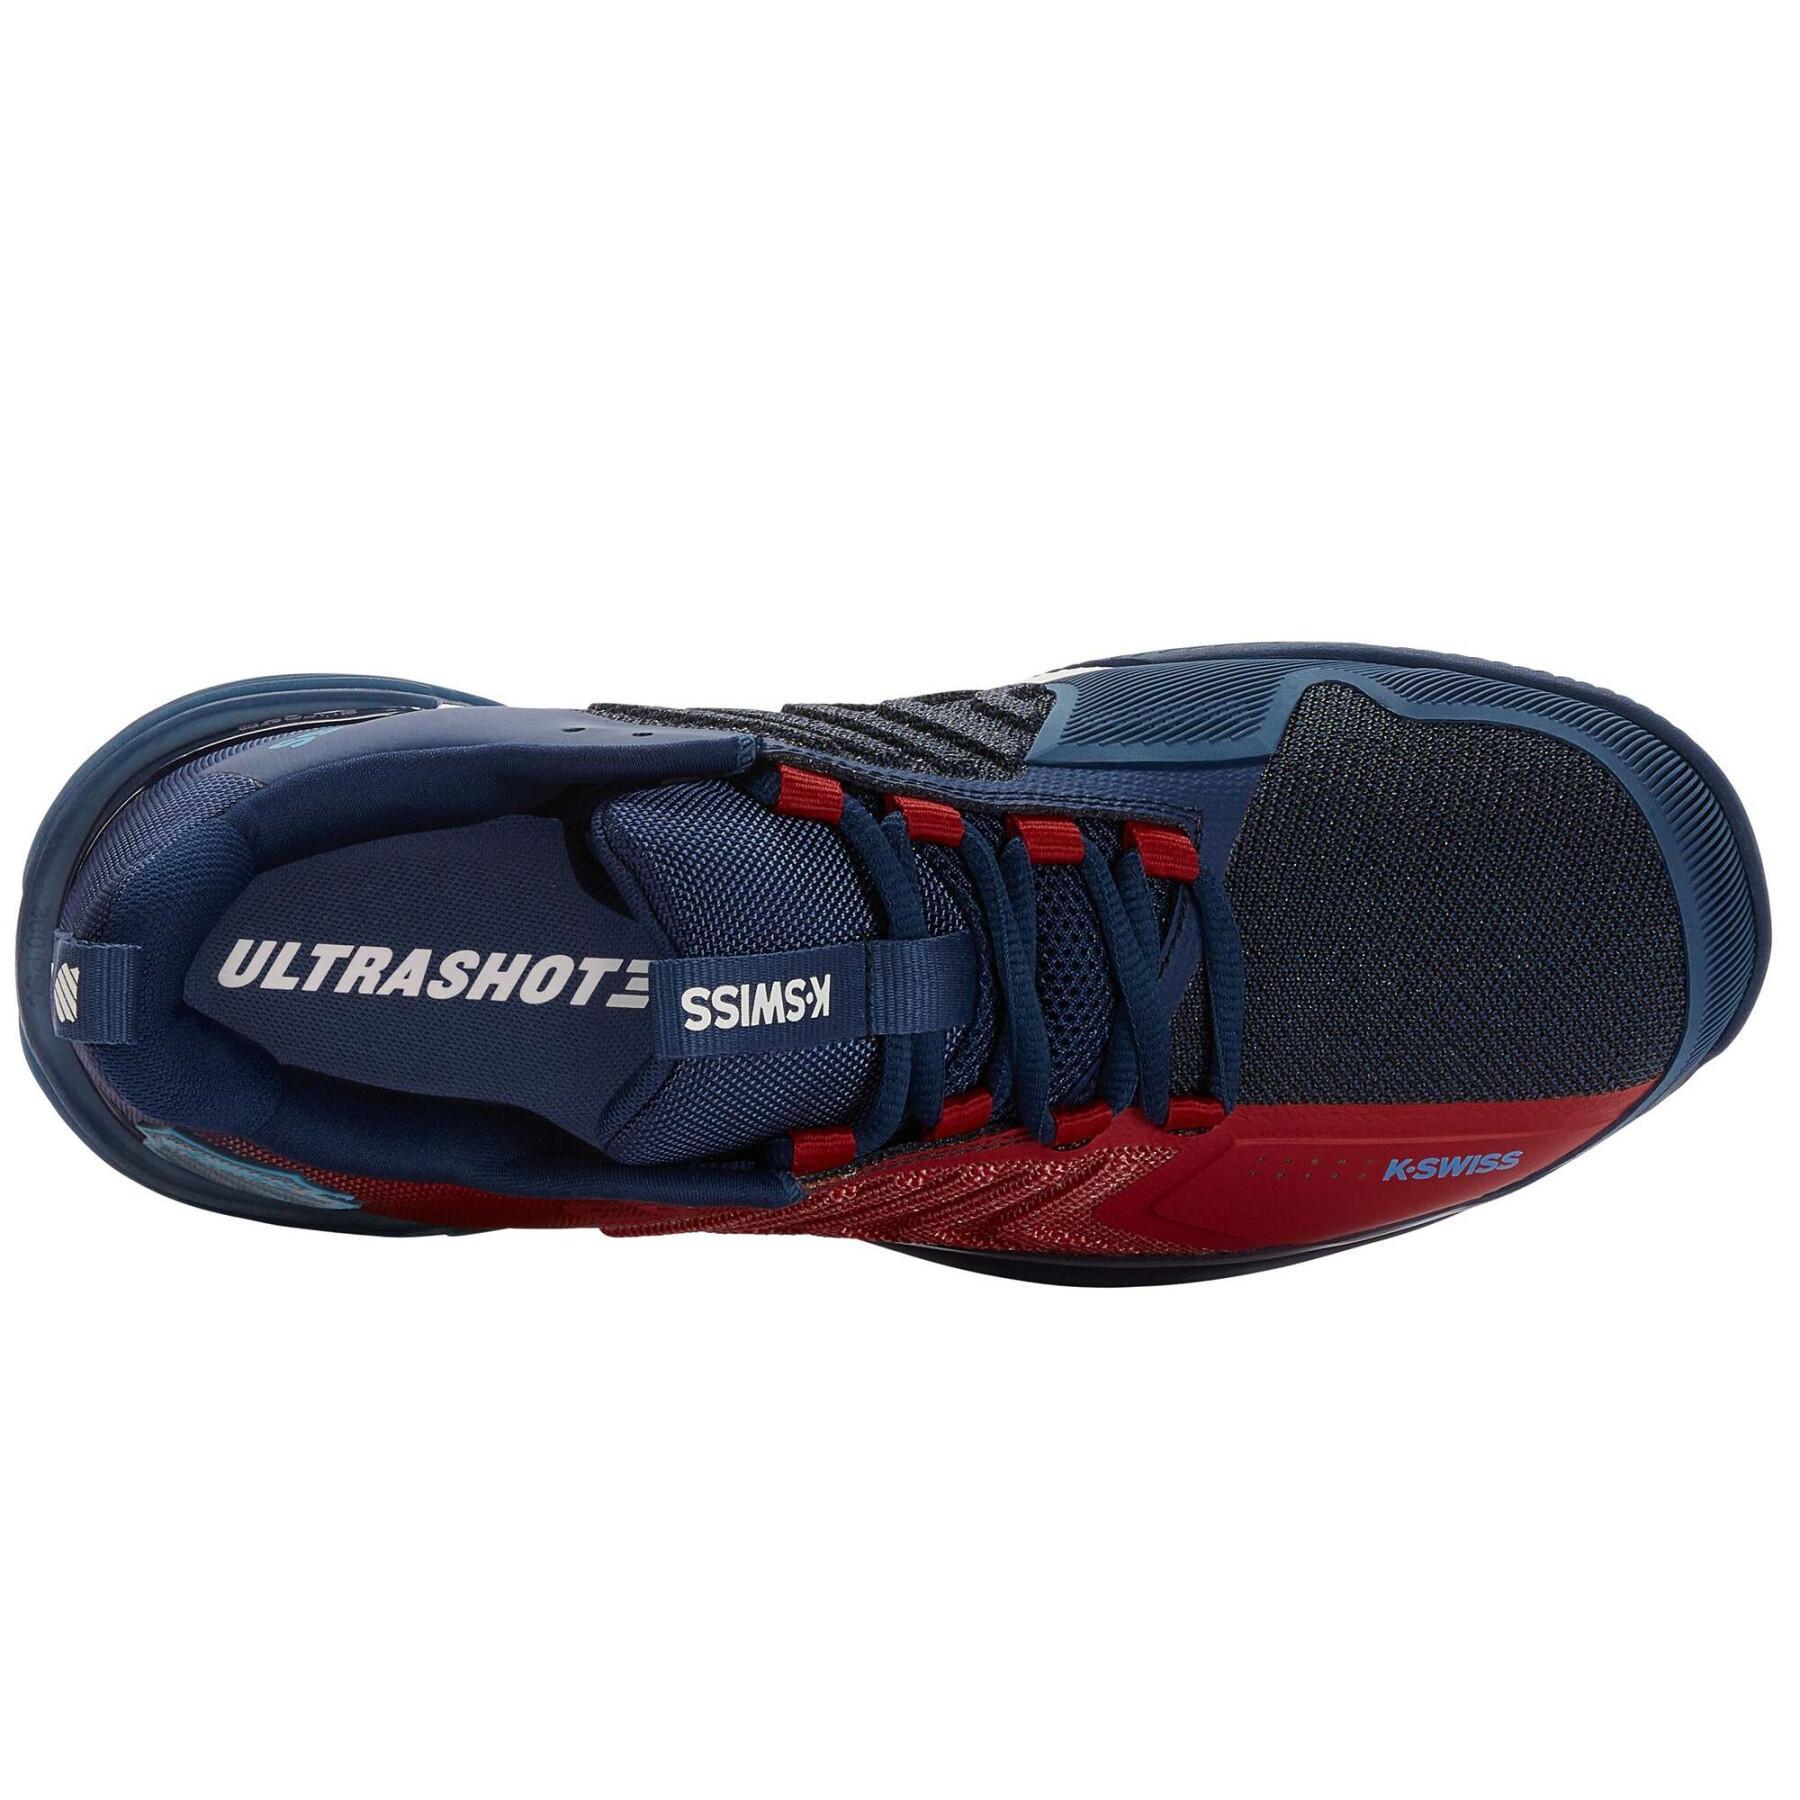 Tennis shoes K-Swiss Ultrashot 3 Hb